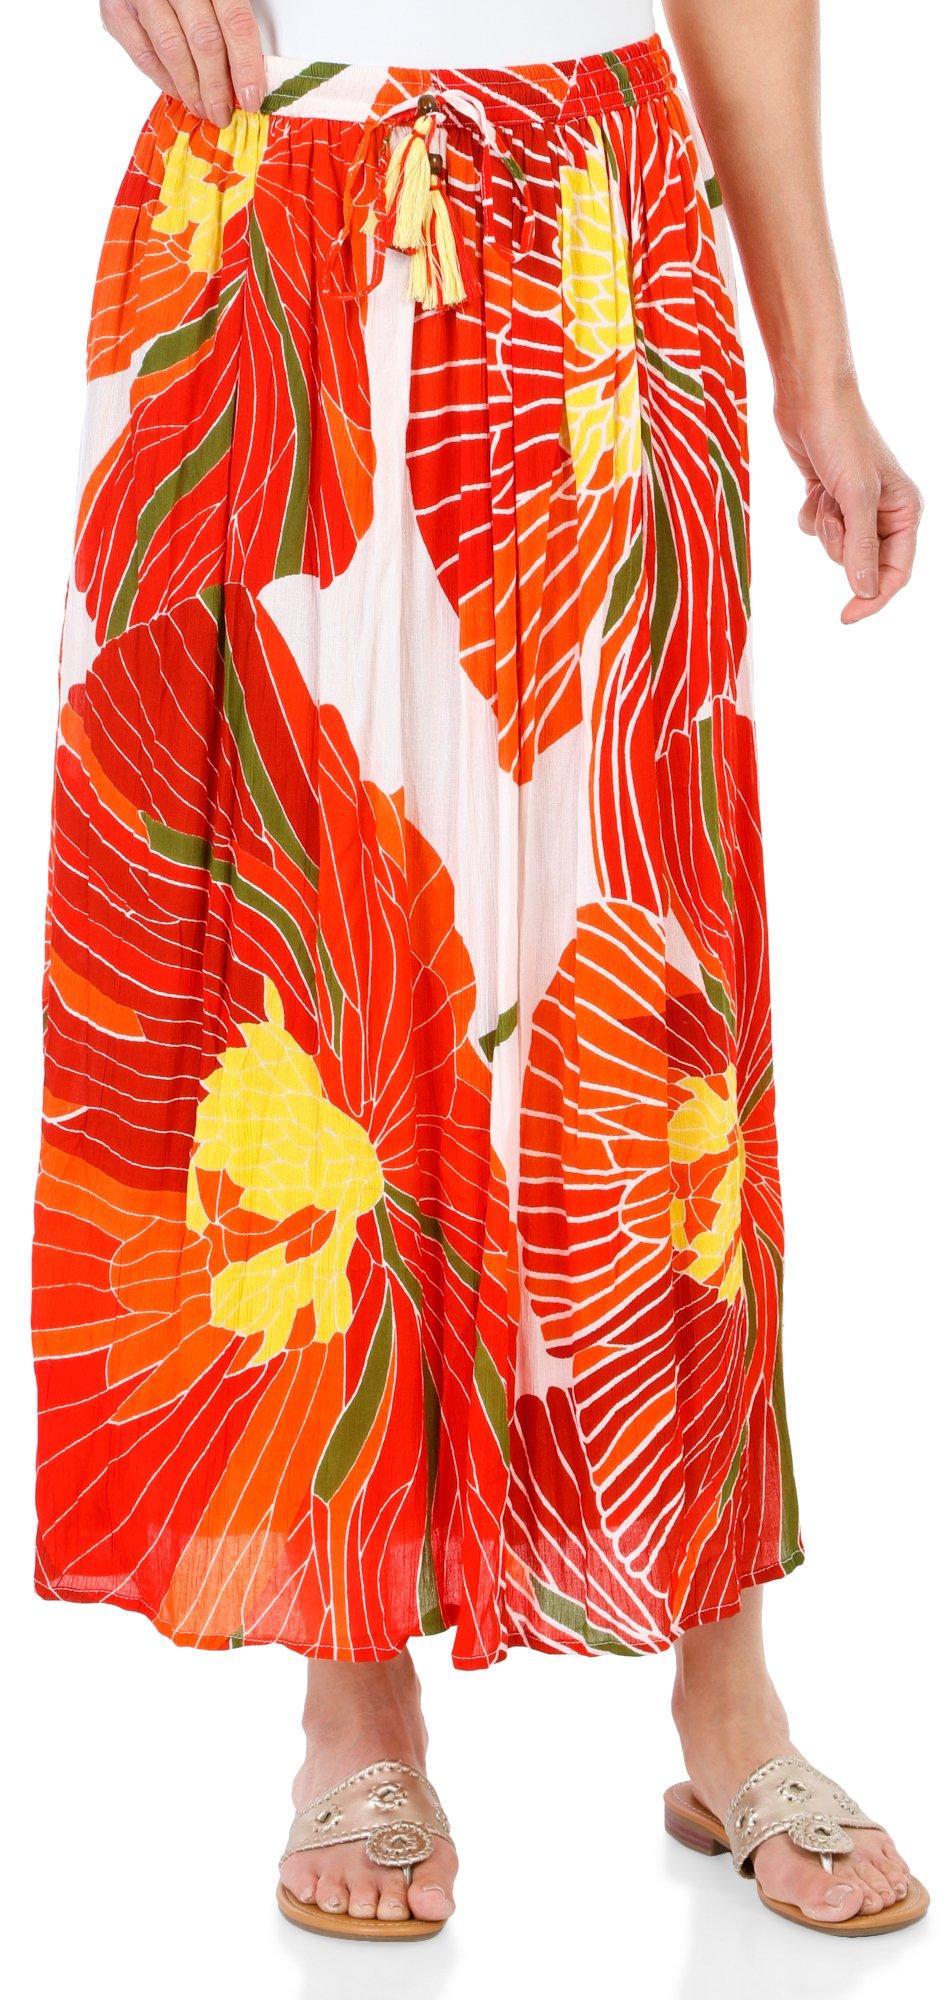 Women's Floral Print Maxi Skirt